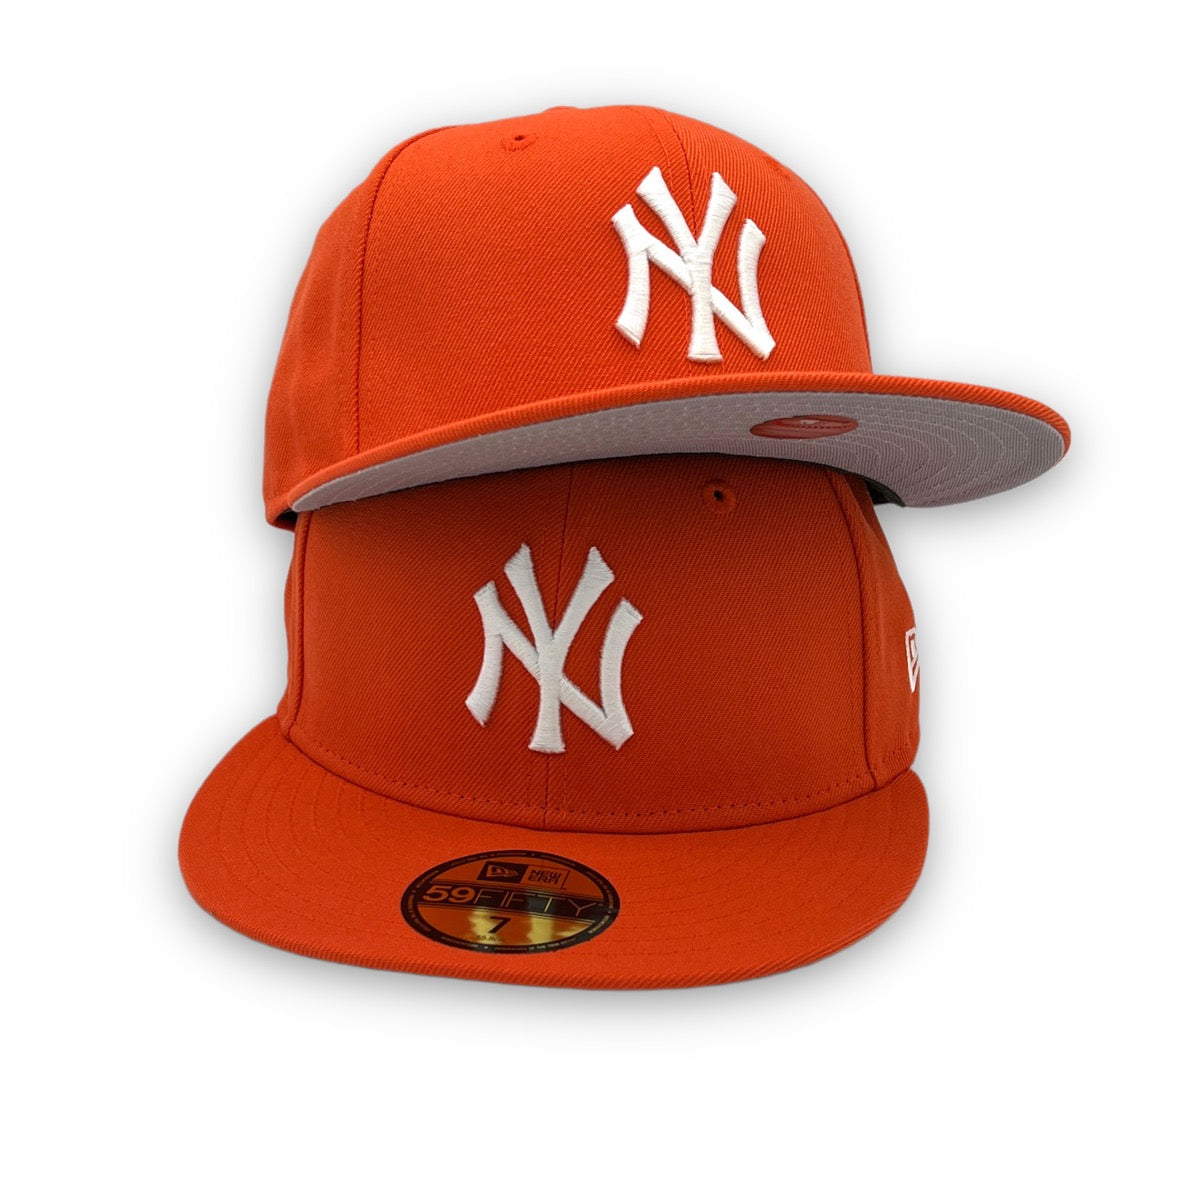 new york orange fitted hat